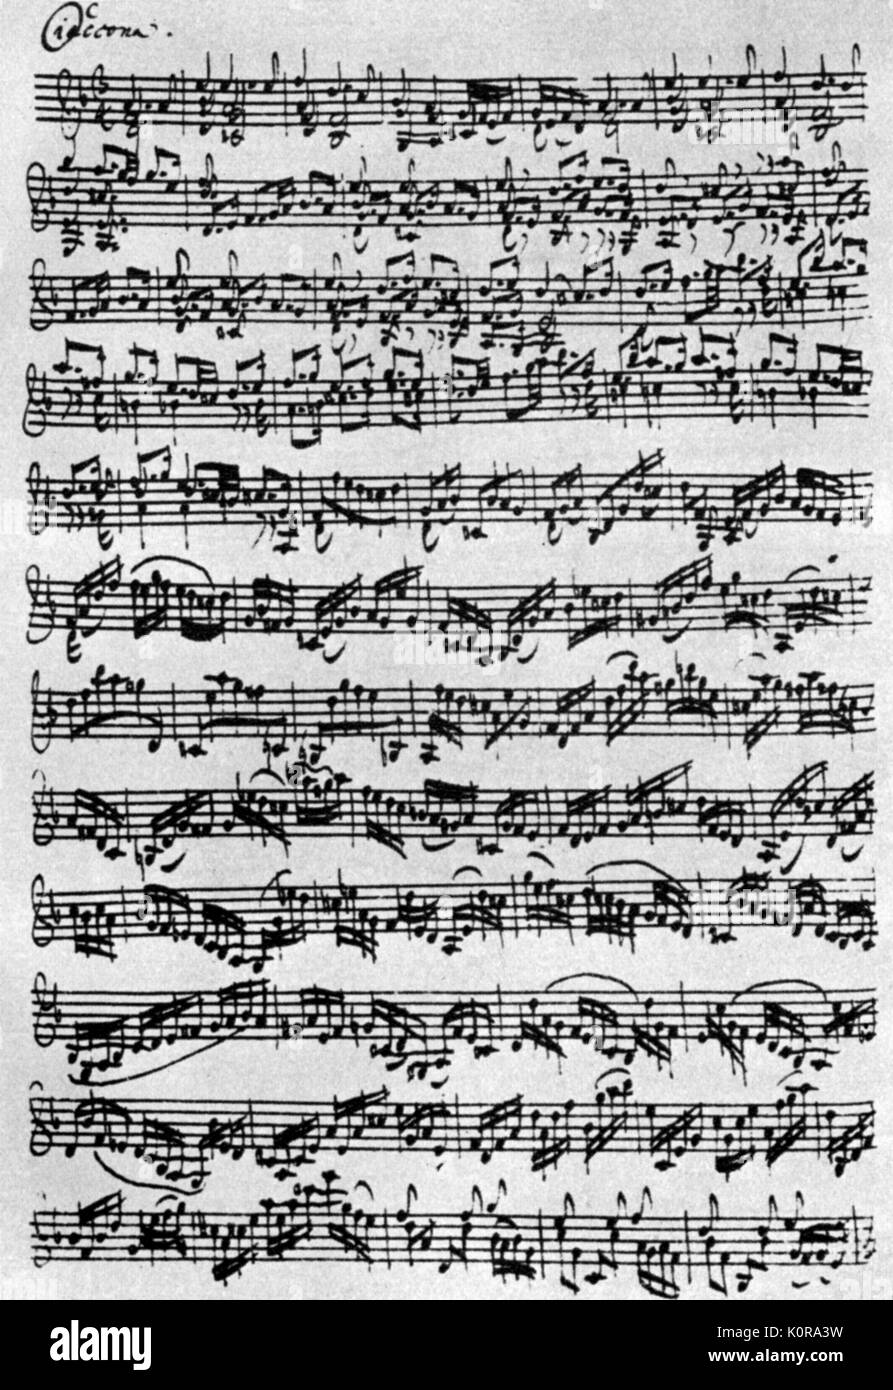 Johann Sebastian Bach - ciaccona / chaconne for solo violin in D-Minor  Partita. German composer and organist. 1685-1750 Stock Photo - Alamy